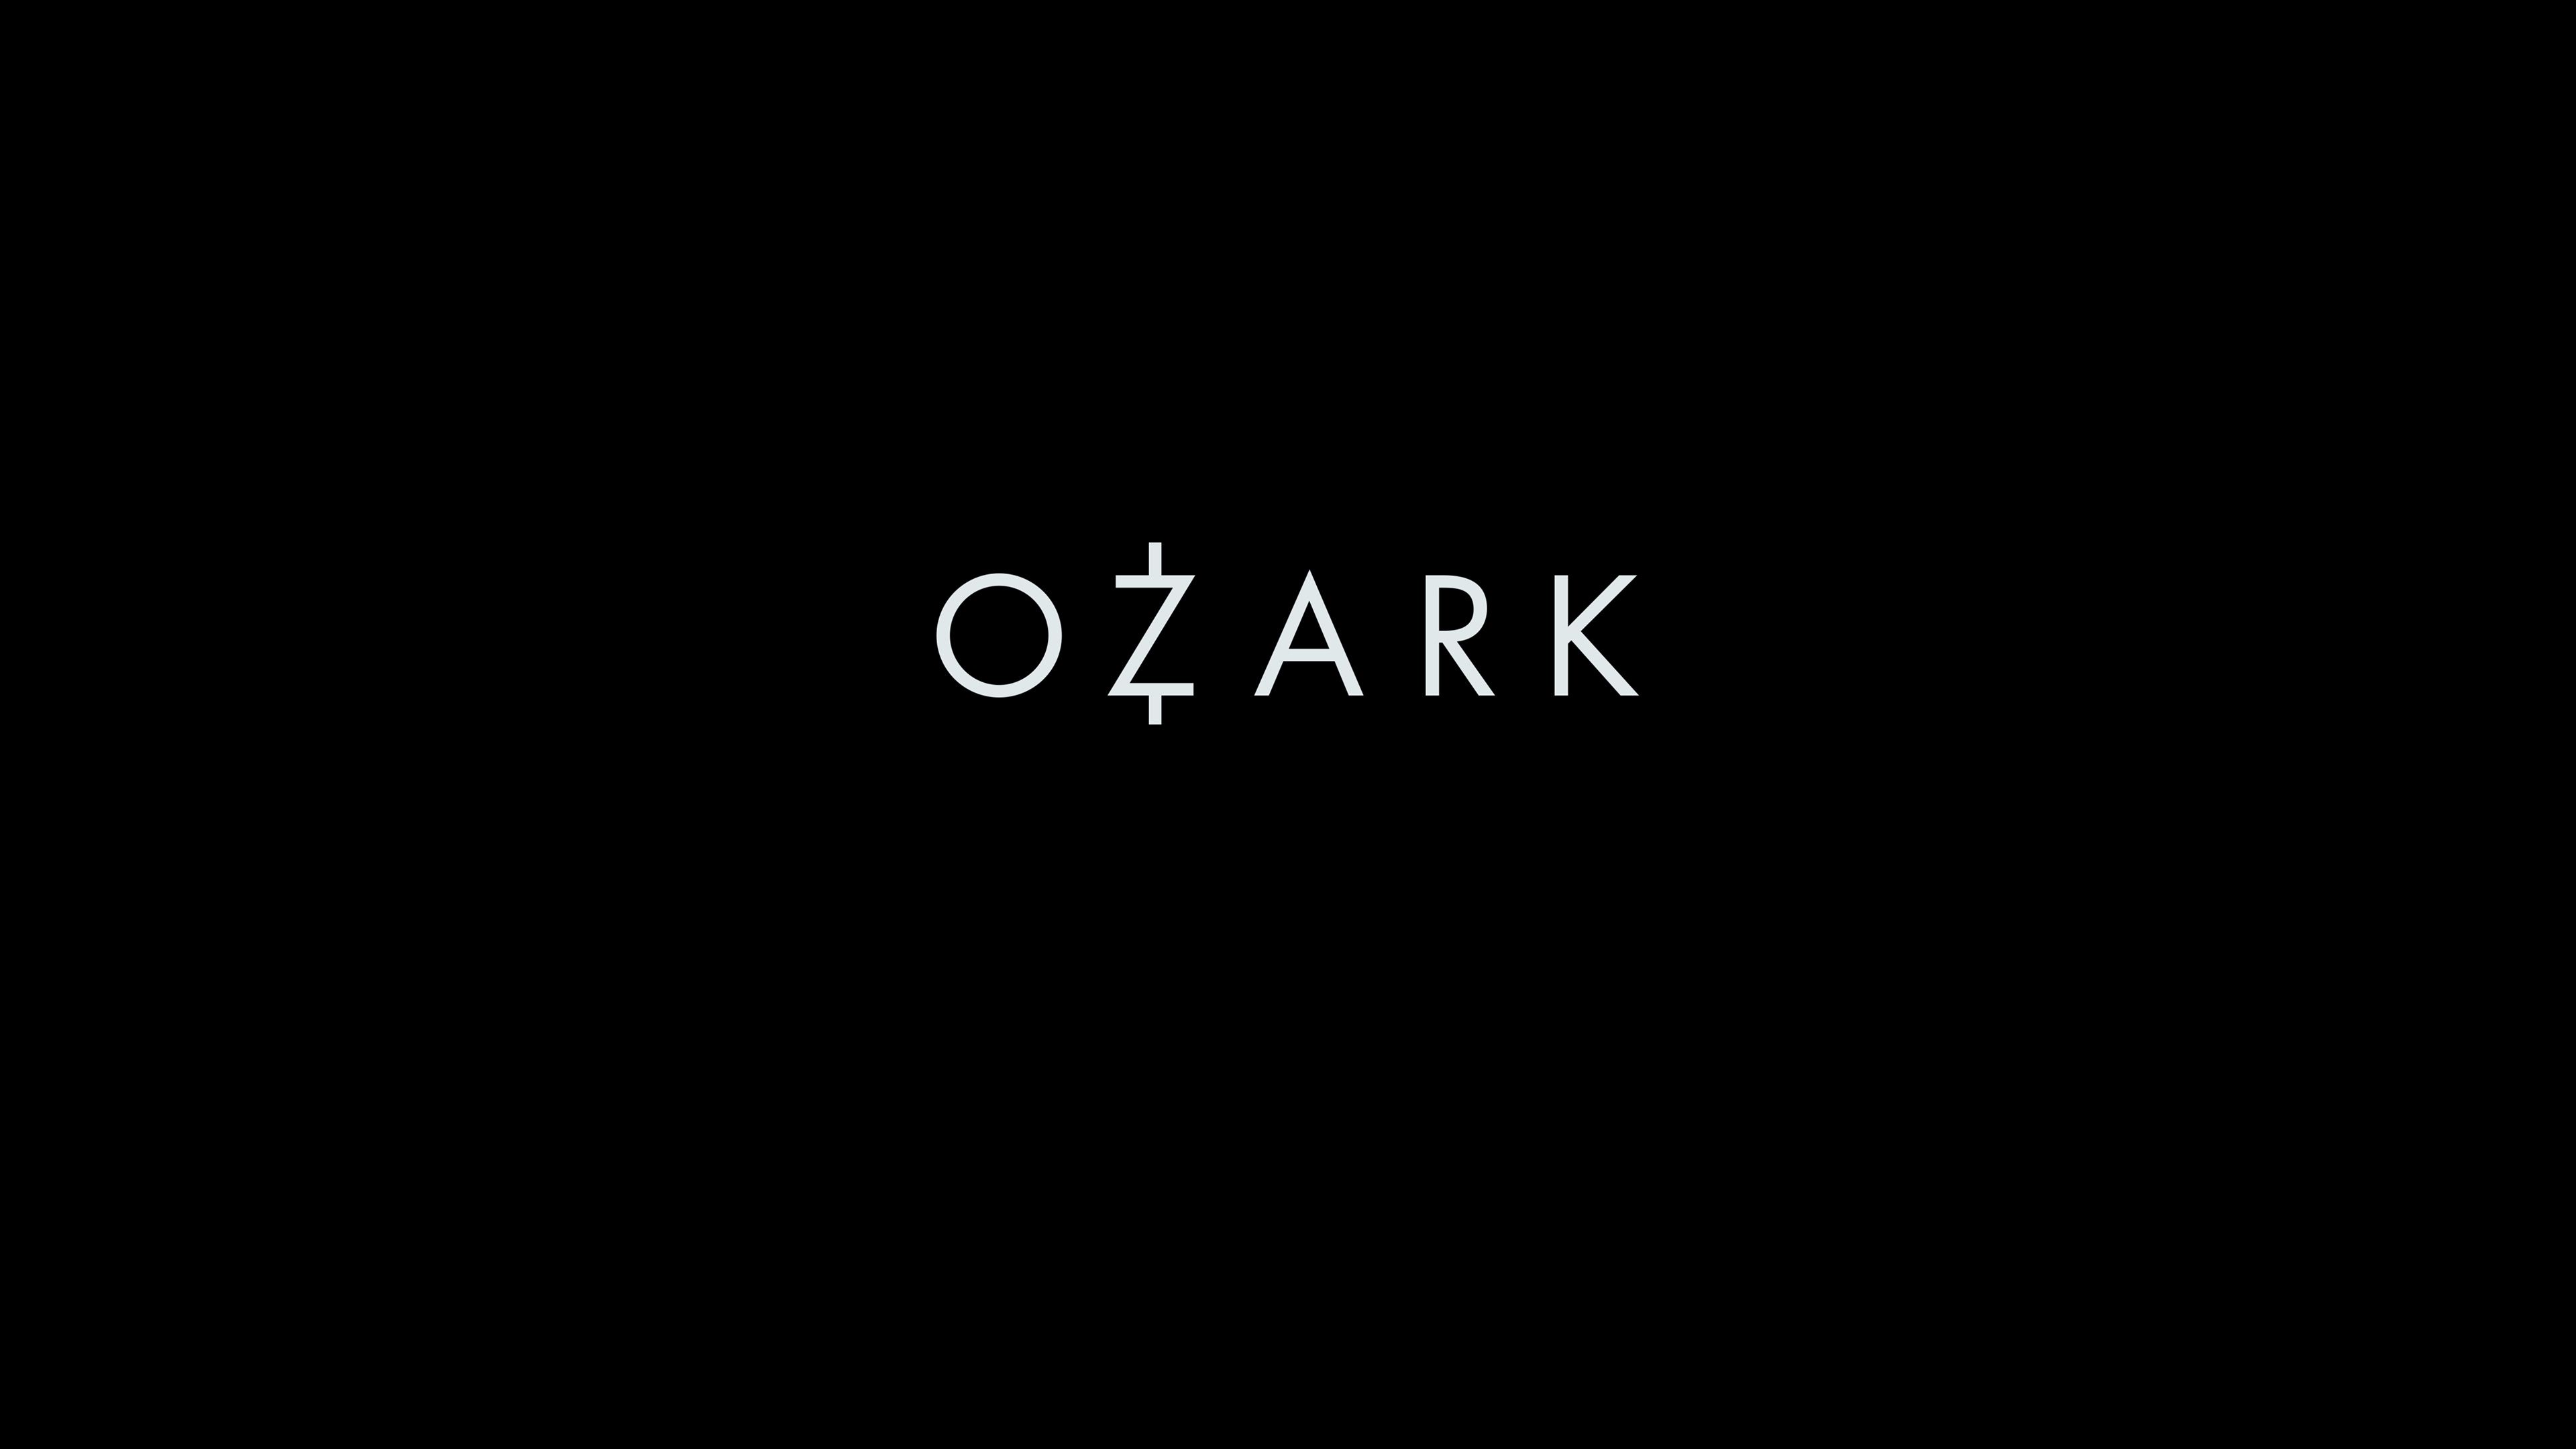 3840x2160 Ozark 4k Logo Hd Tv Shows 4k Wallpaper Image